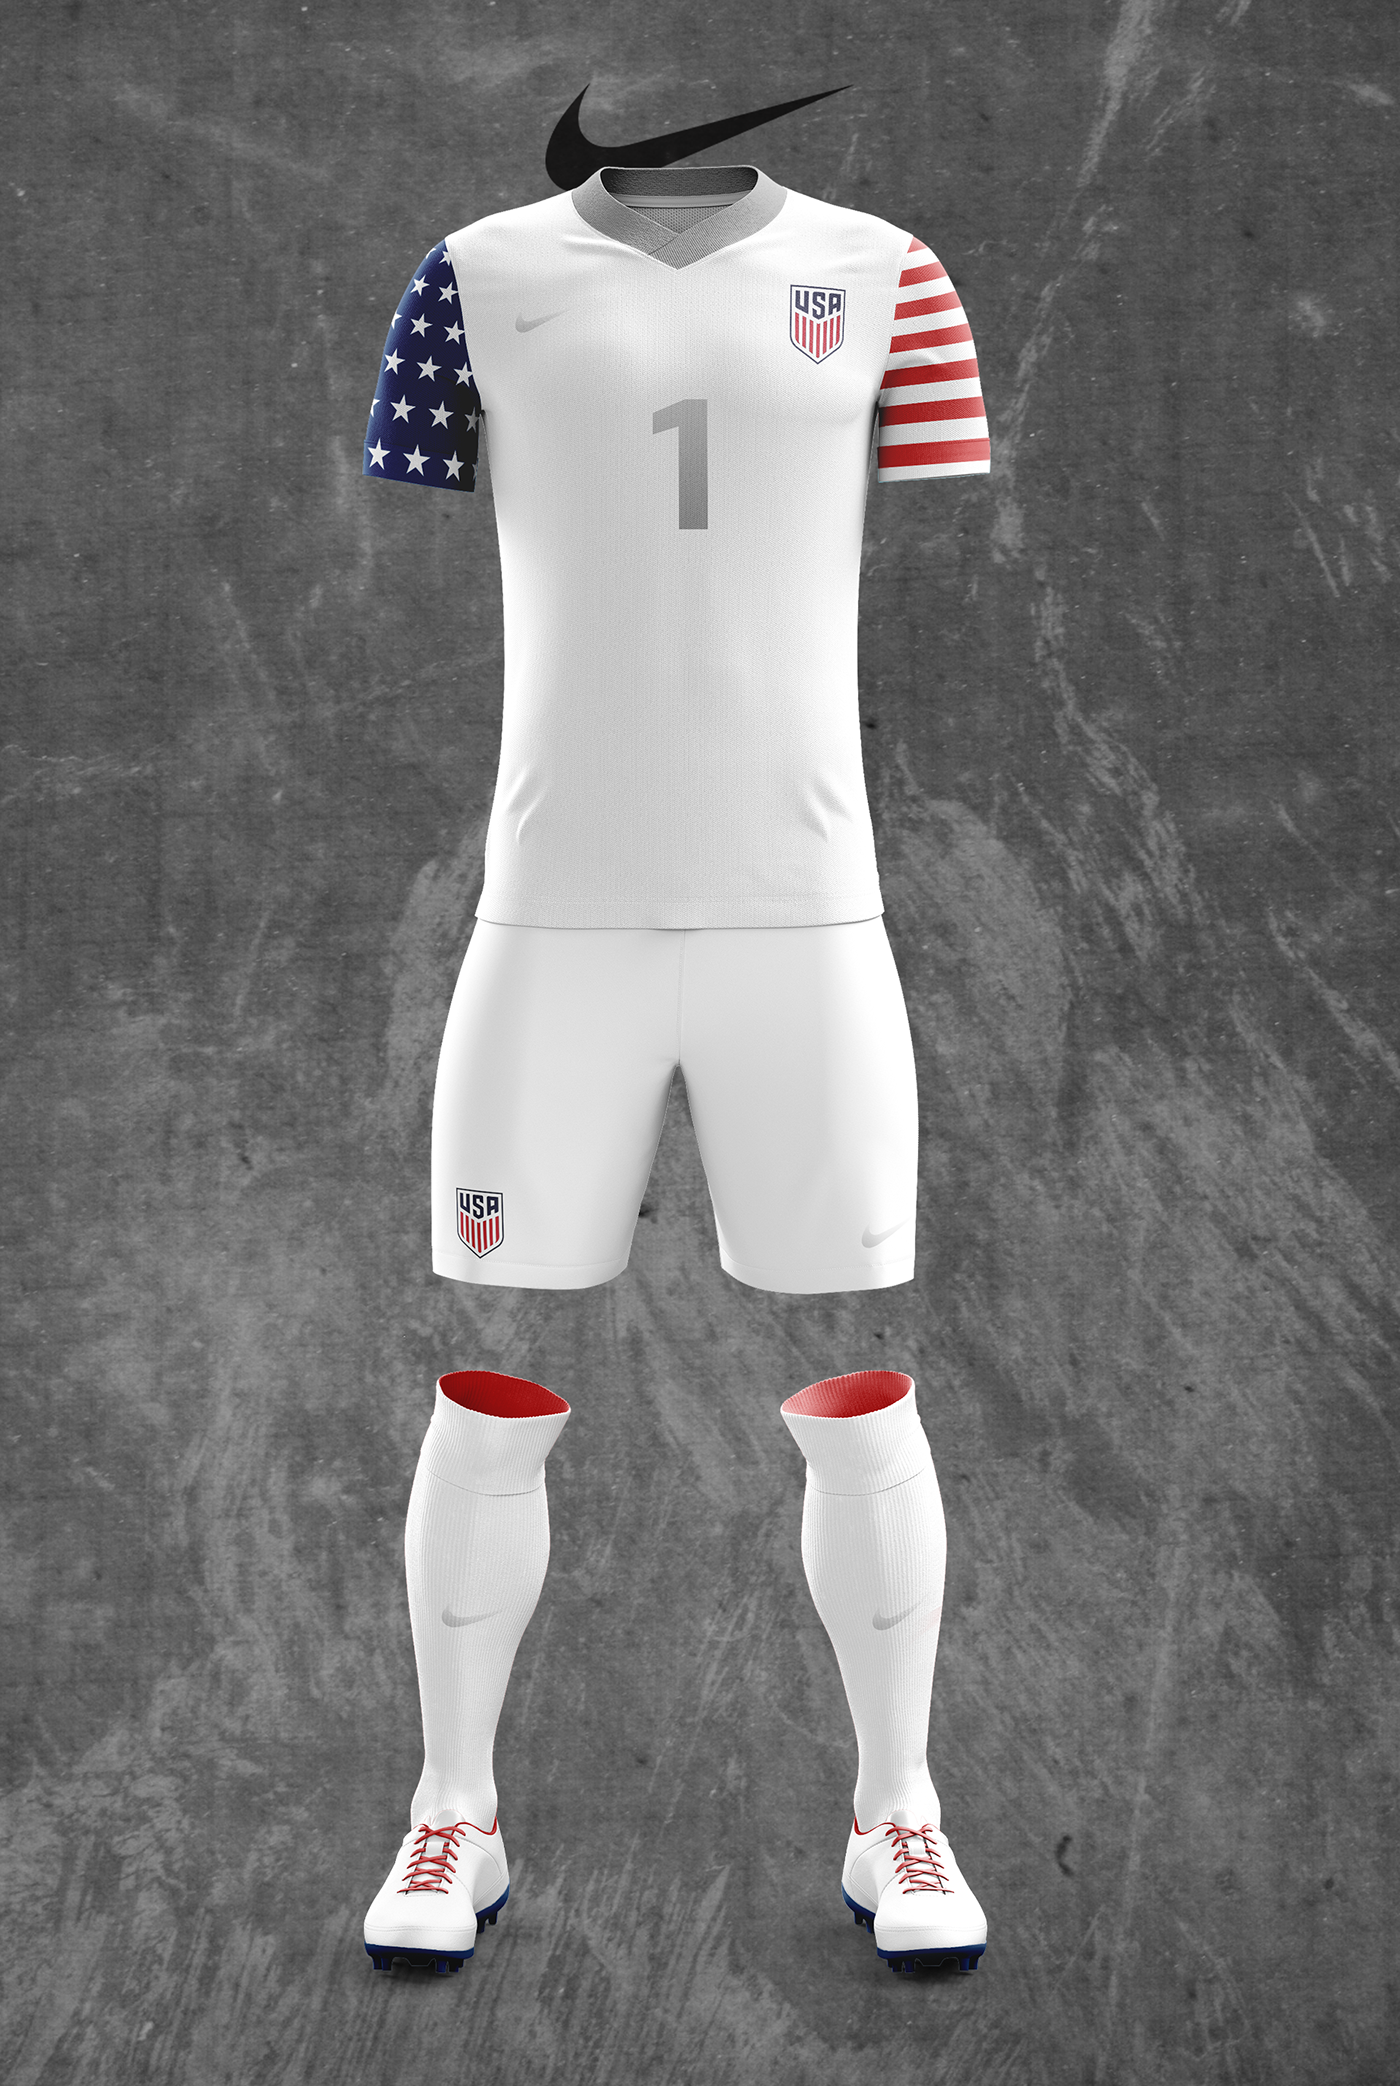 Concept Jerseys soccer jerseys  nike soccer Nike Football Designs Nike Football Concepts Nike Soccer Concept USA Soccer Jerseys sports sports concept designs